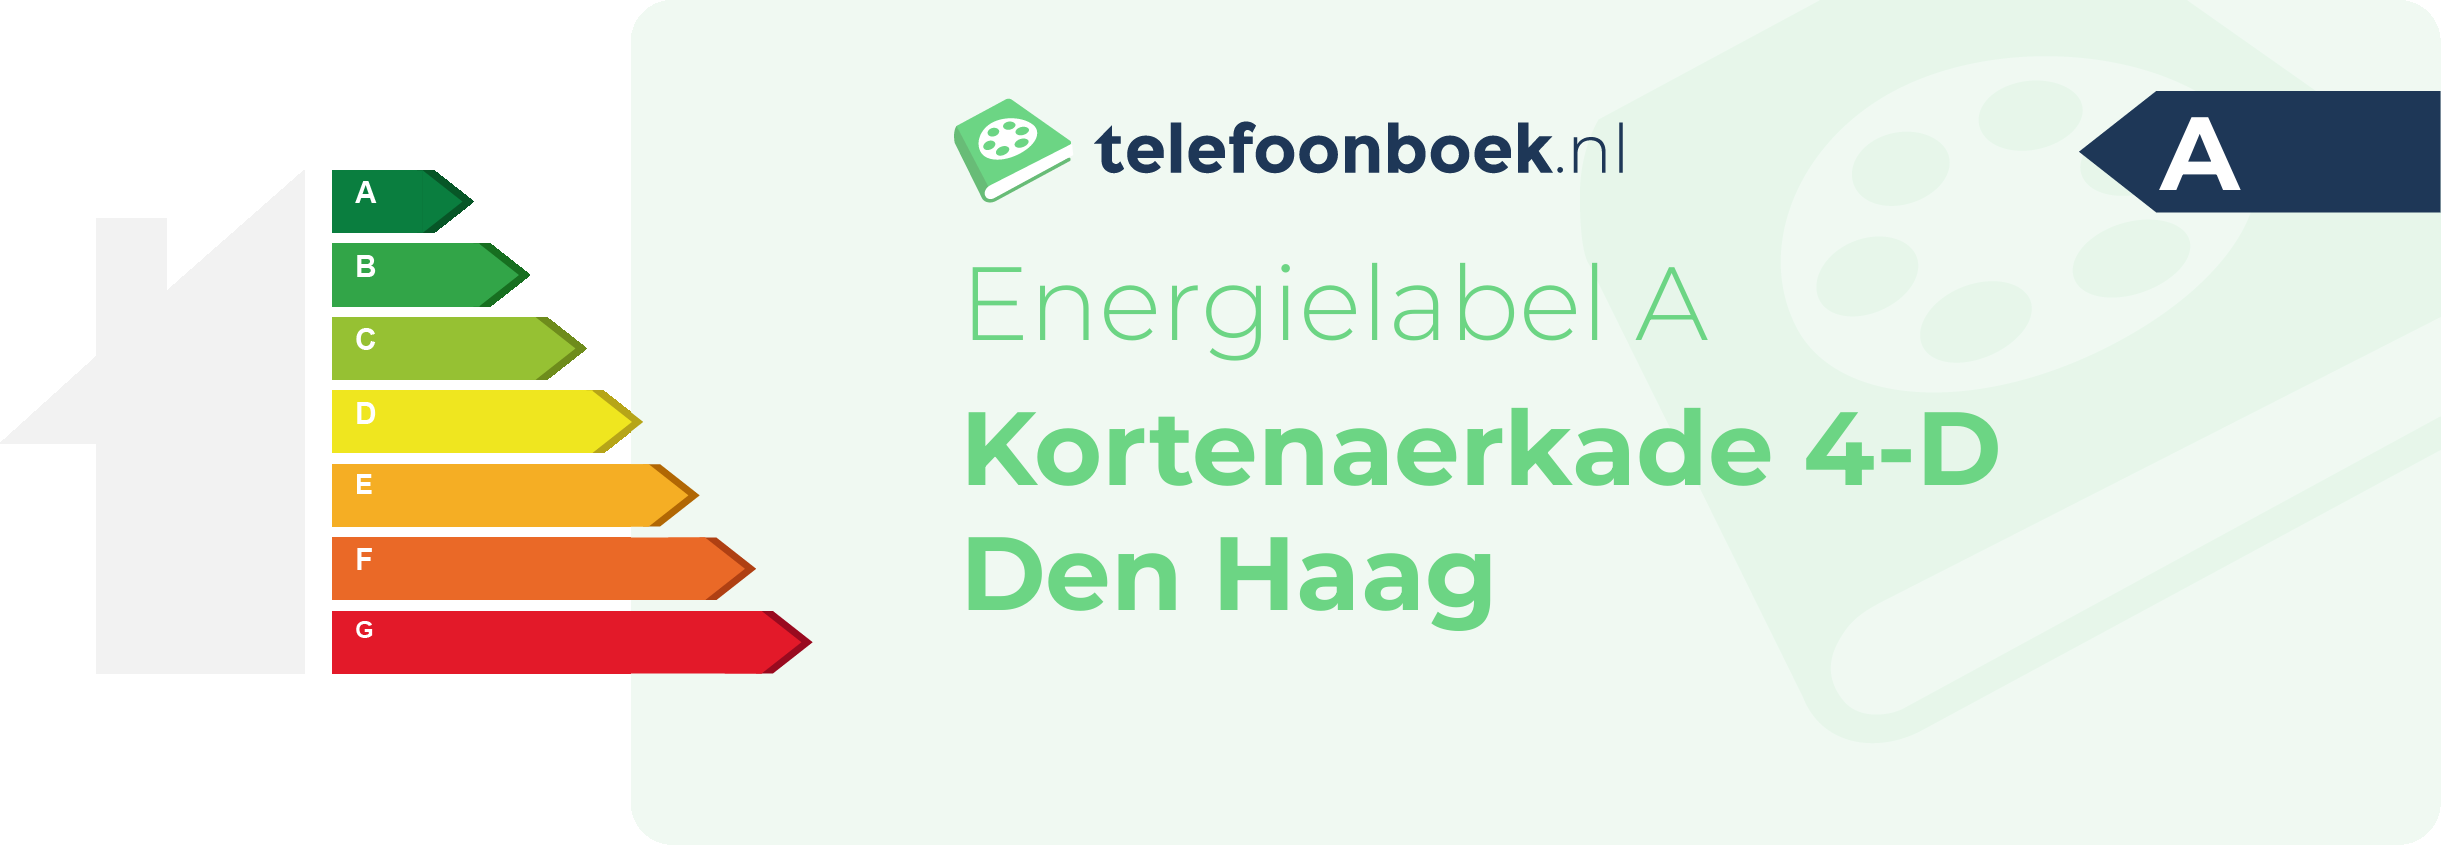 Energielabel Kortenaerkade 4-D Den Haag